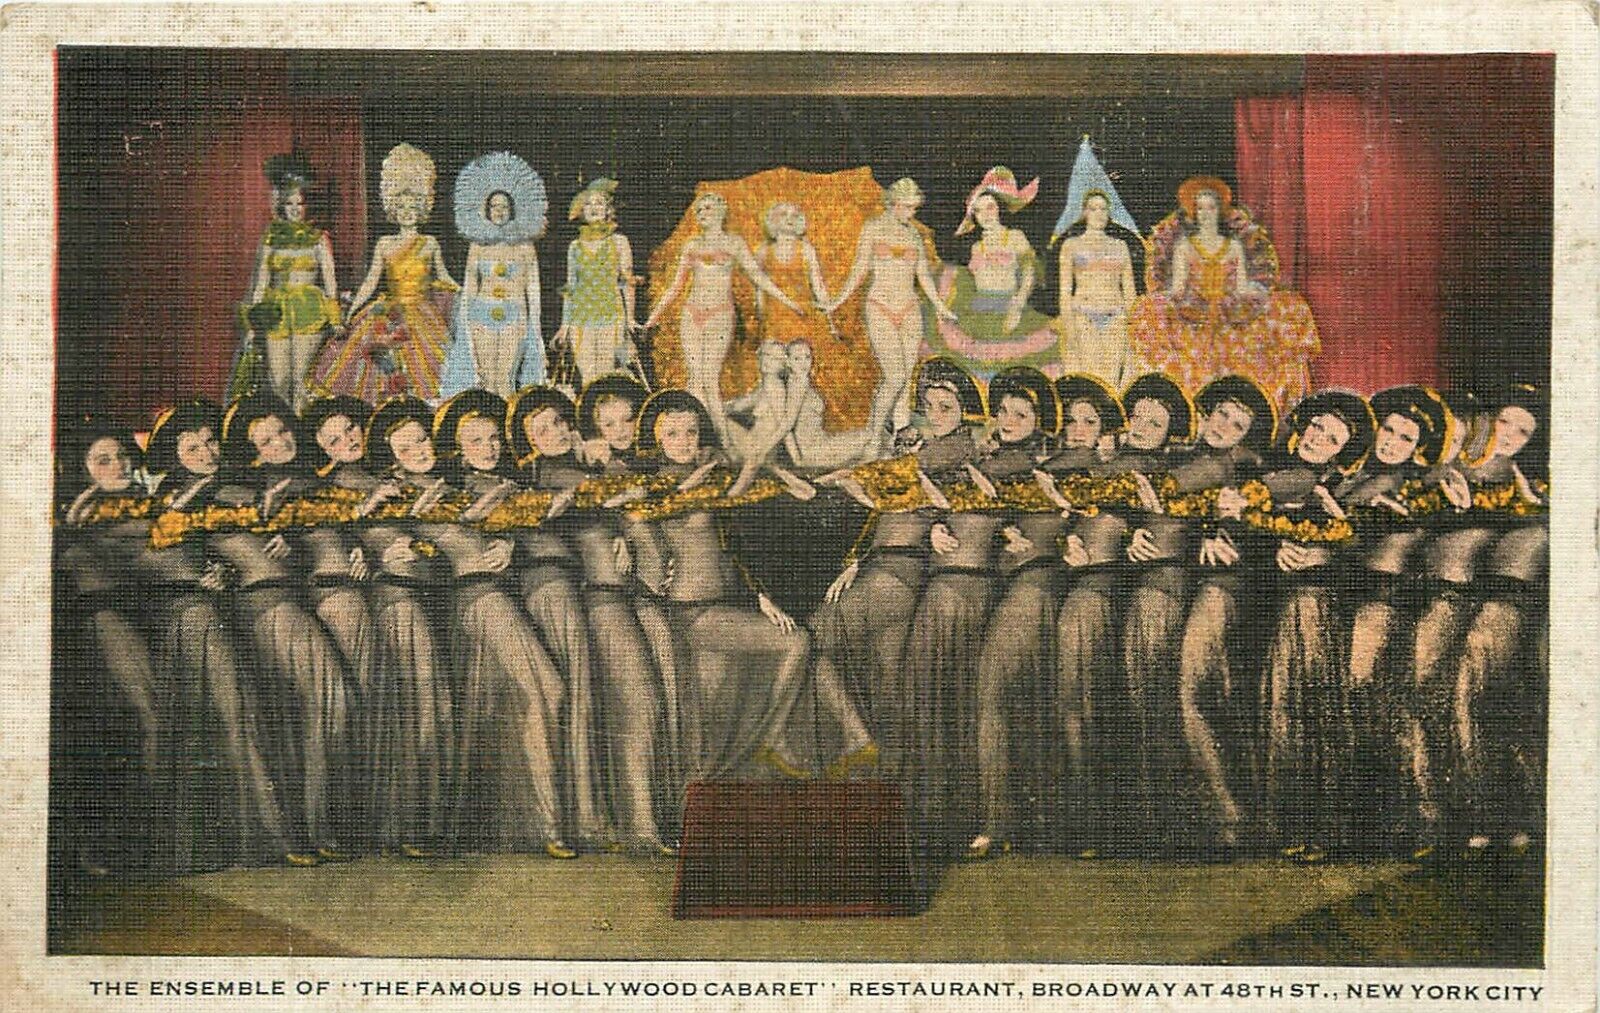 1936 Hollywood Cabaret Restaurant Ensemble on Broadway, New York City Postcard